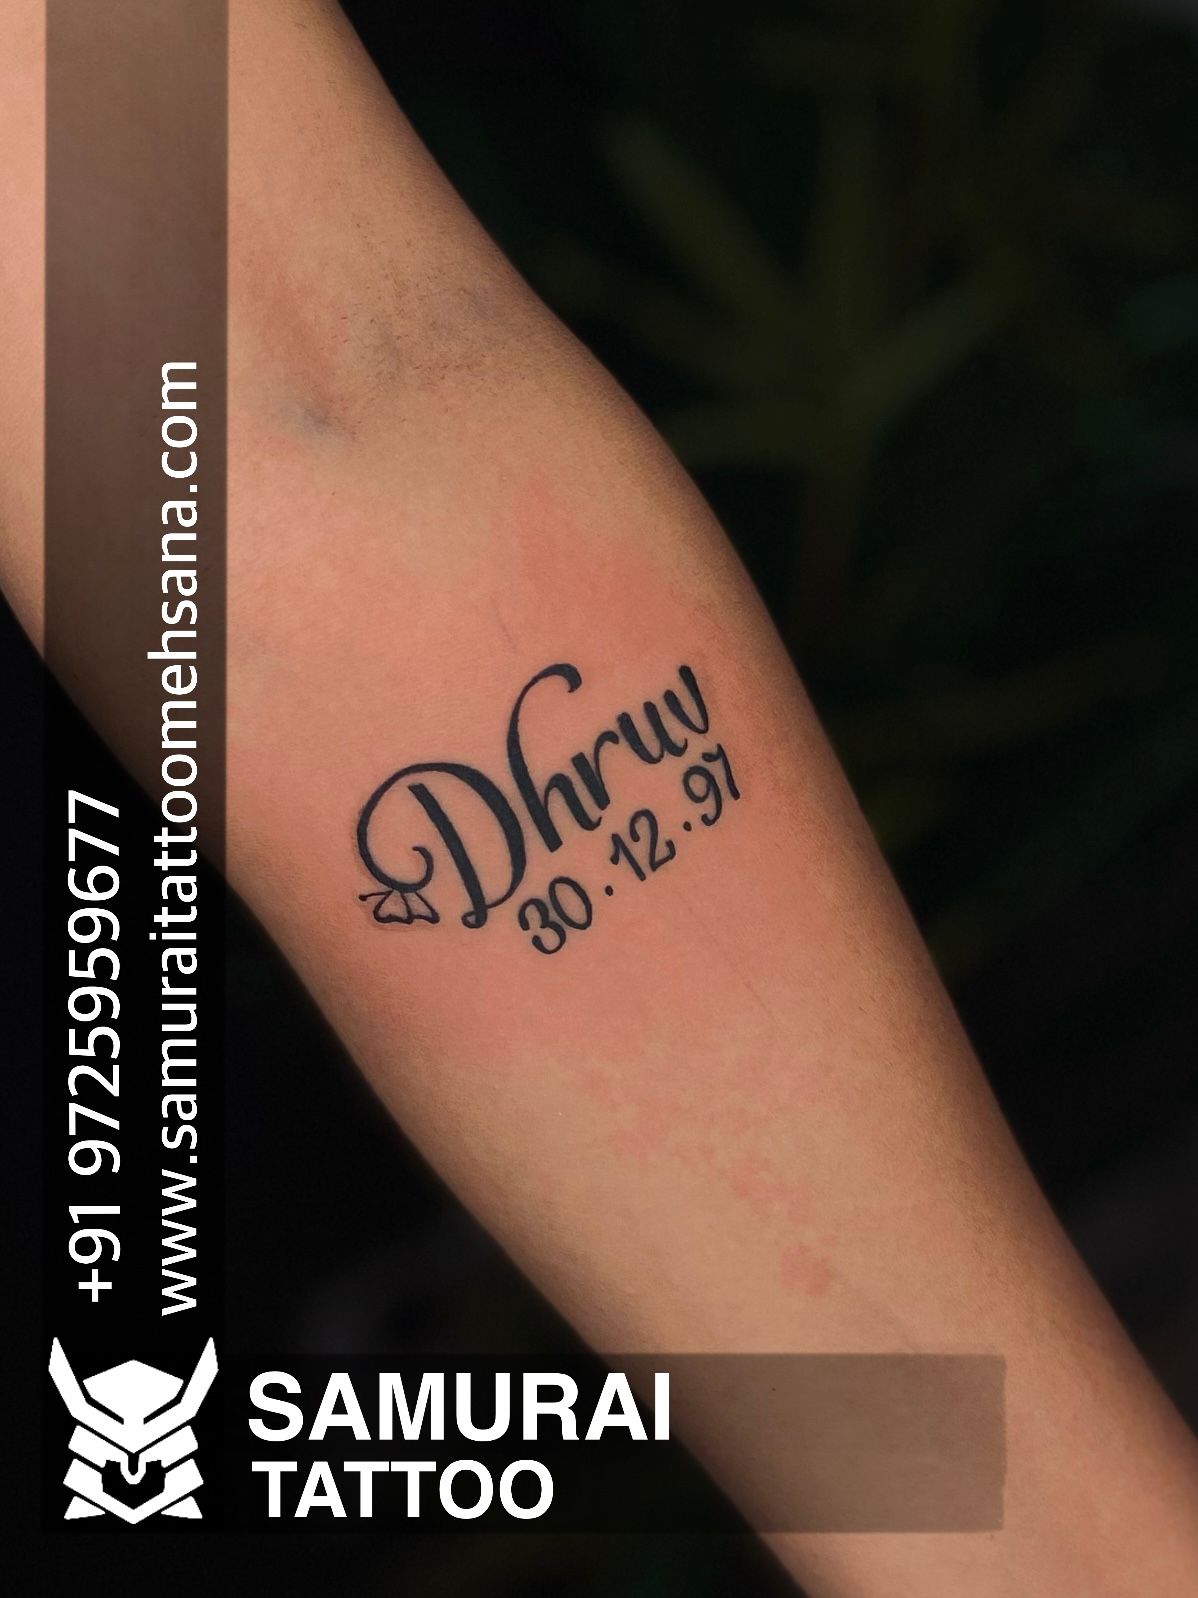 Crazy ink tattoo  Body piercing on Twitter ALPHABET TATTOO DESIGN By  tattoo artist Kunal Vegad For more info visithttpstcoEjdpPz8b6Q  httpstcoIdd9byLbG7  Twitter